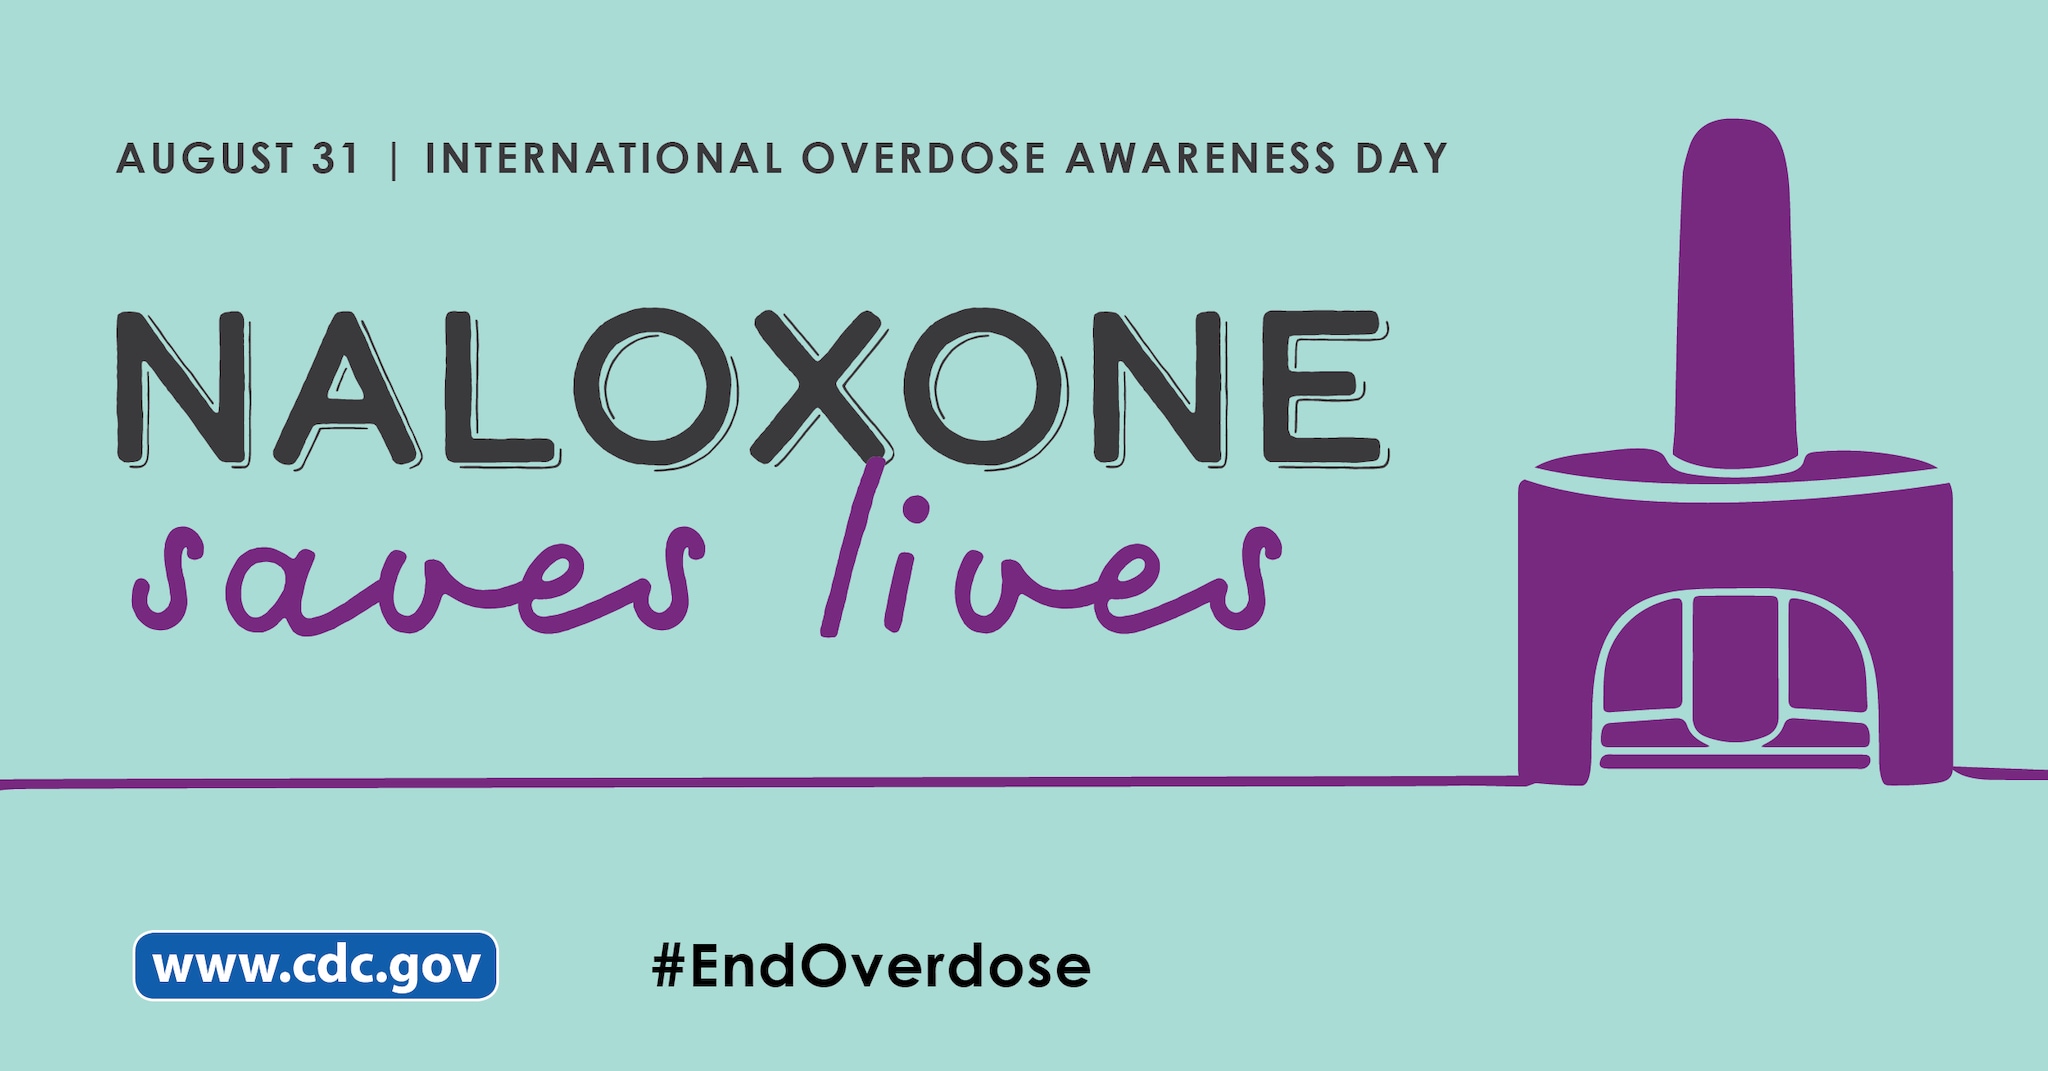 International Overdose Awareness Day   August 31  Naloxone saves lives